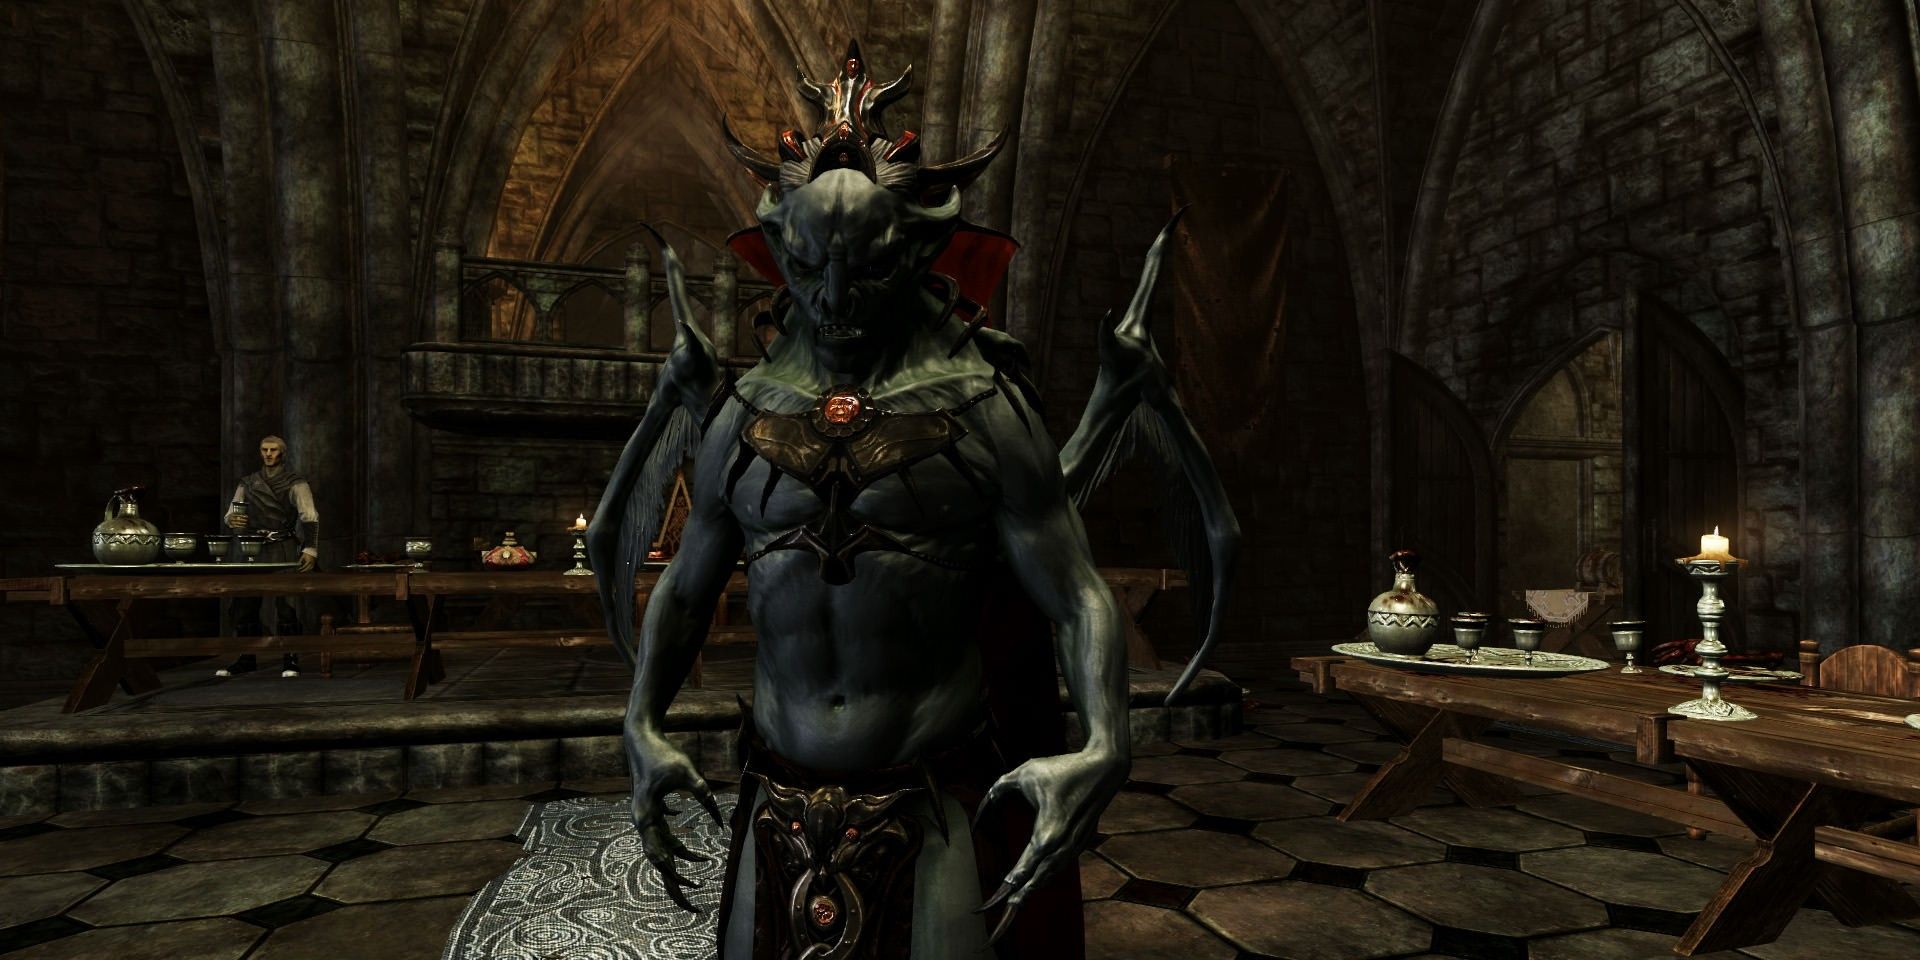 Lord Harkon, the final boss of The Elder Scrolls V: Skyrim - Dawnguard